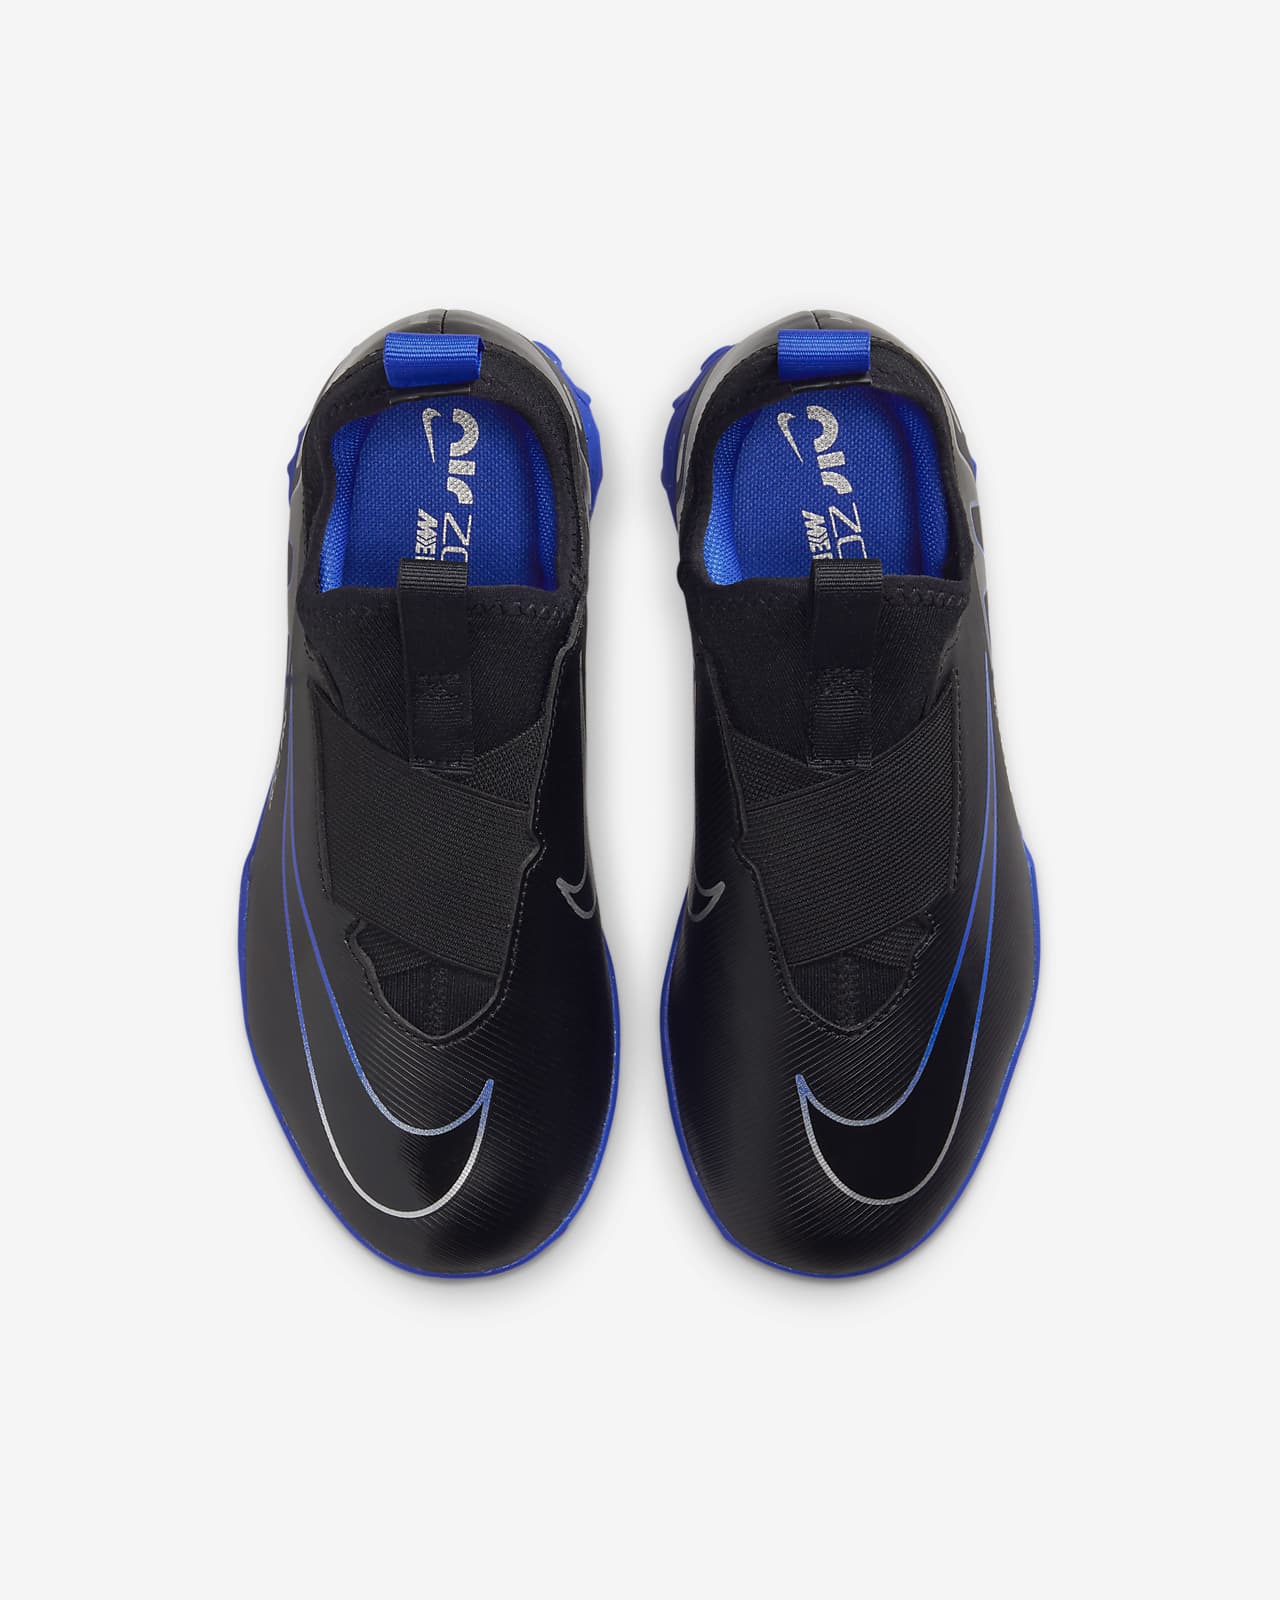 Enfant Terrain synthétique Football Chaussures. Nike FR